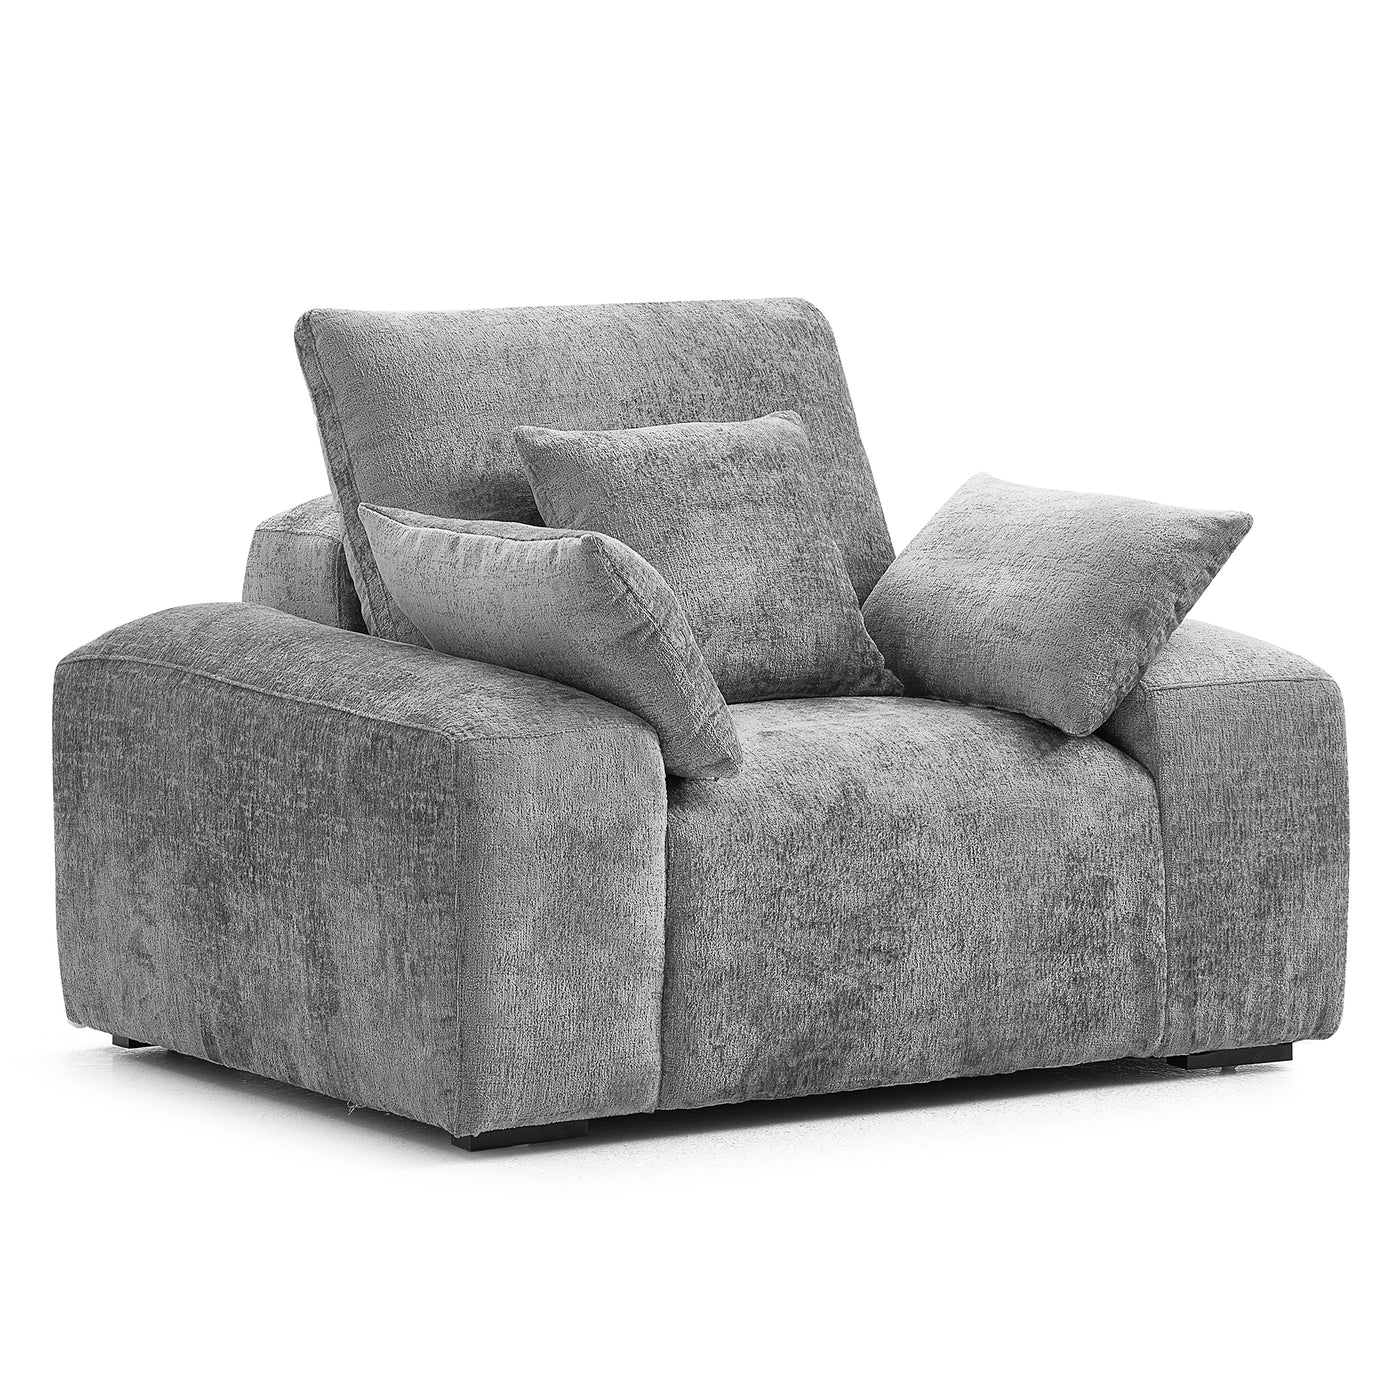 The Empress Beige Sofa Set-Gray